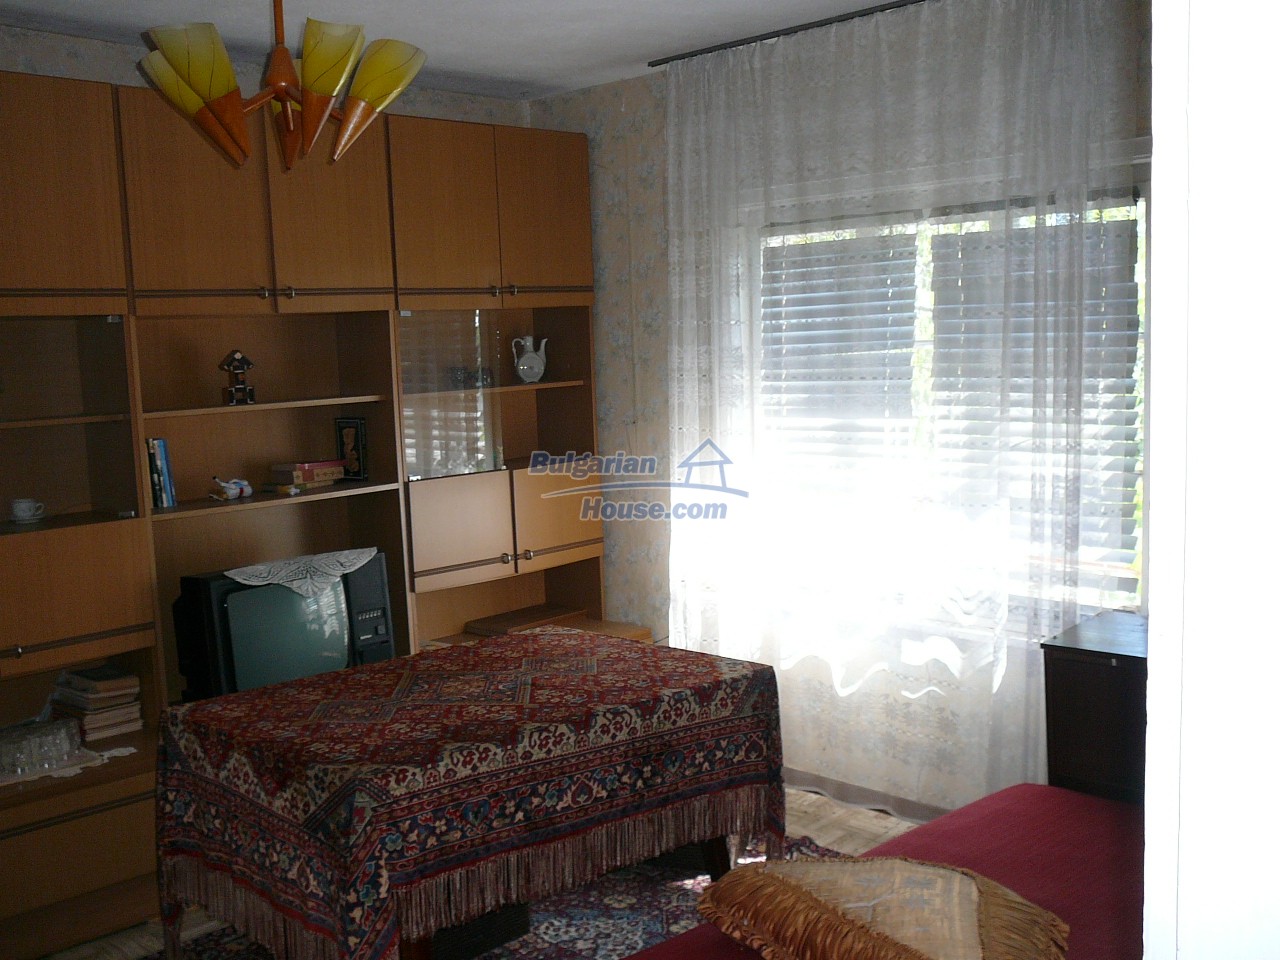 12527:30 - House  in good condition Stara Zagora region 55km to Plovdiv